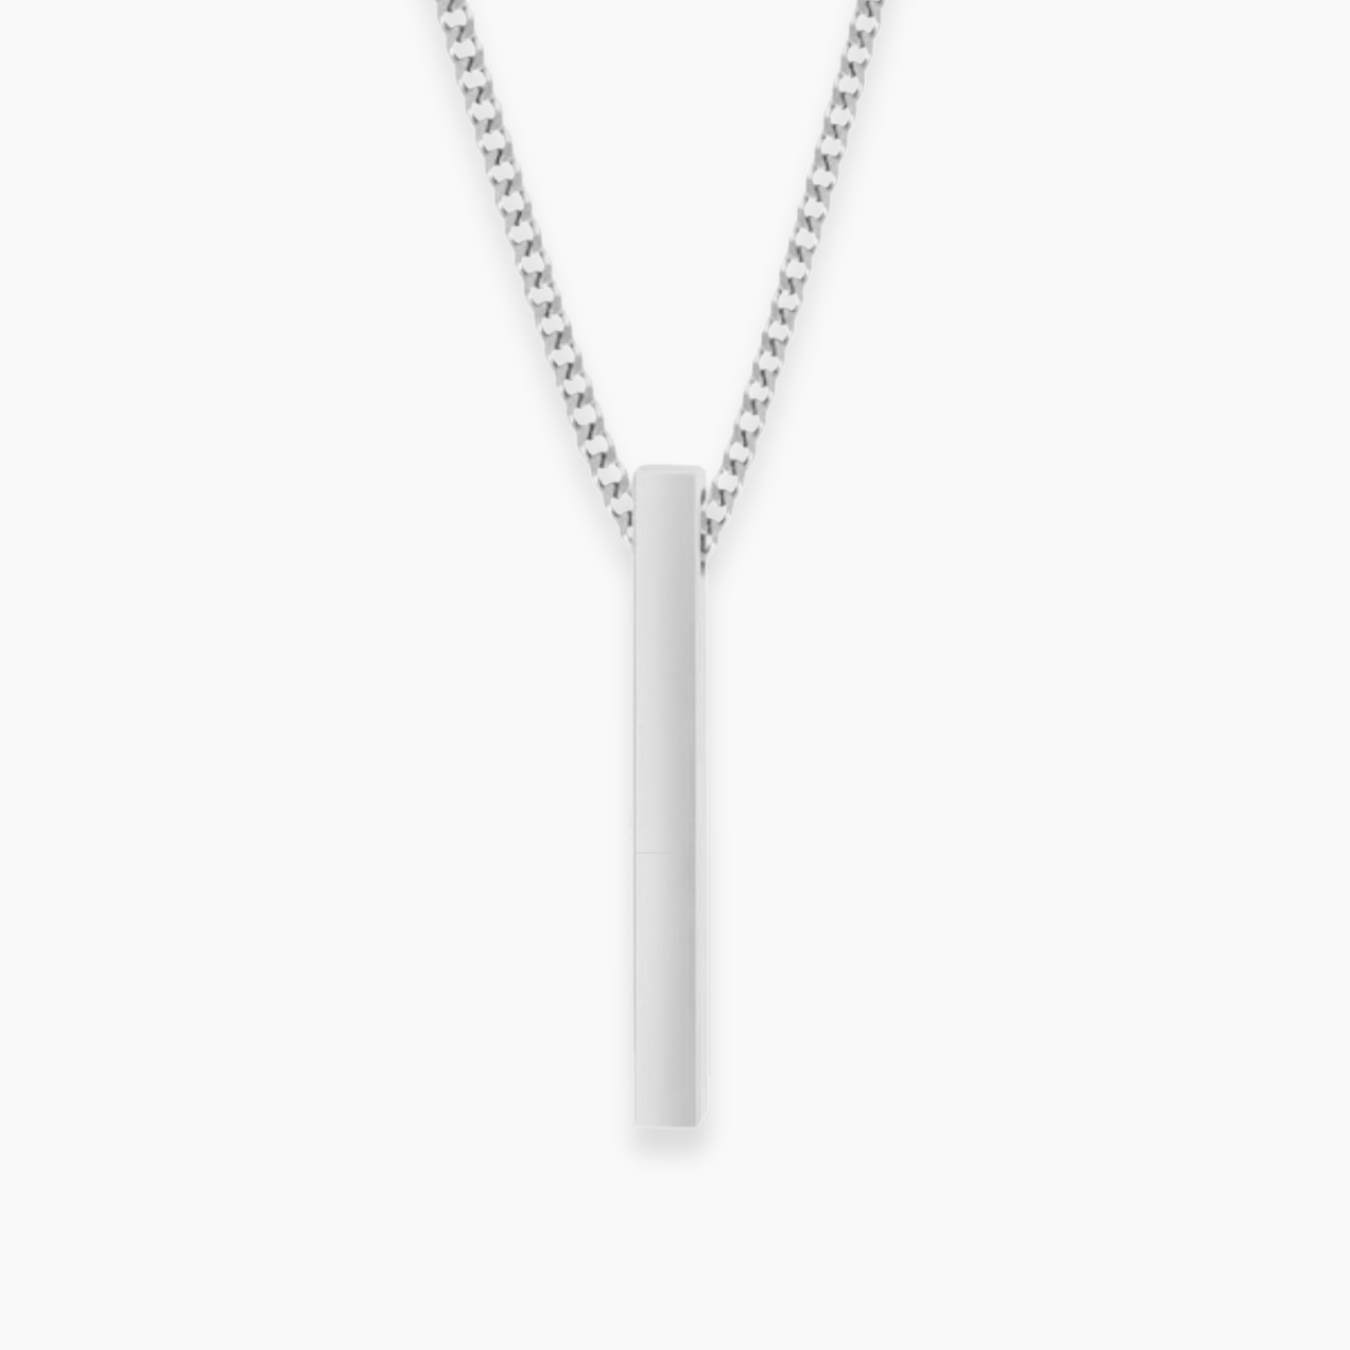 PRISM Personalizable Necklace | Coordinates